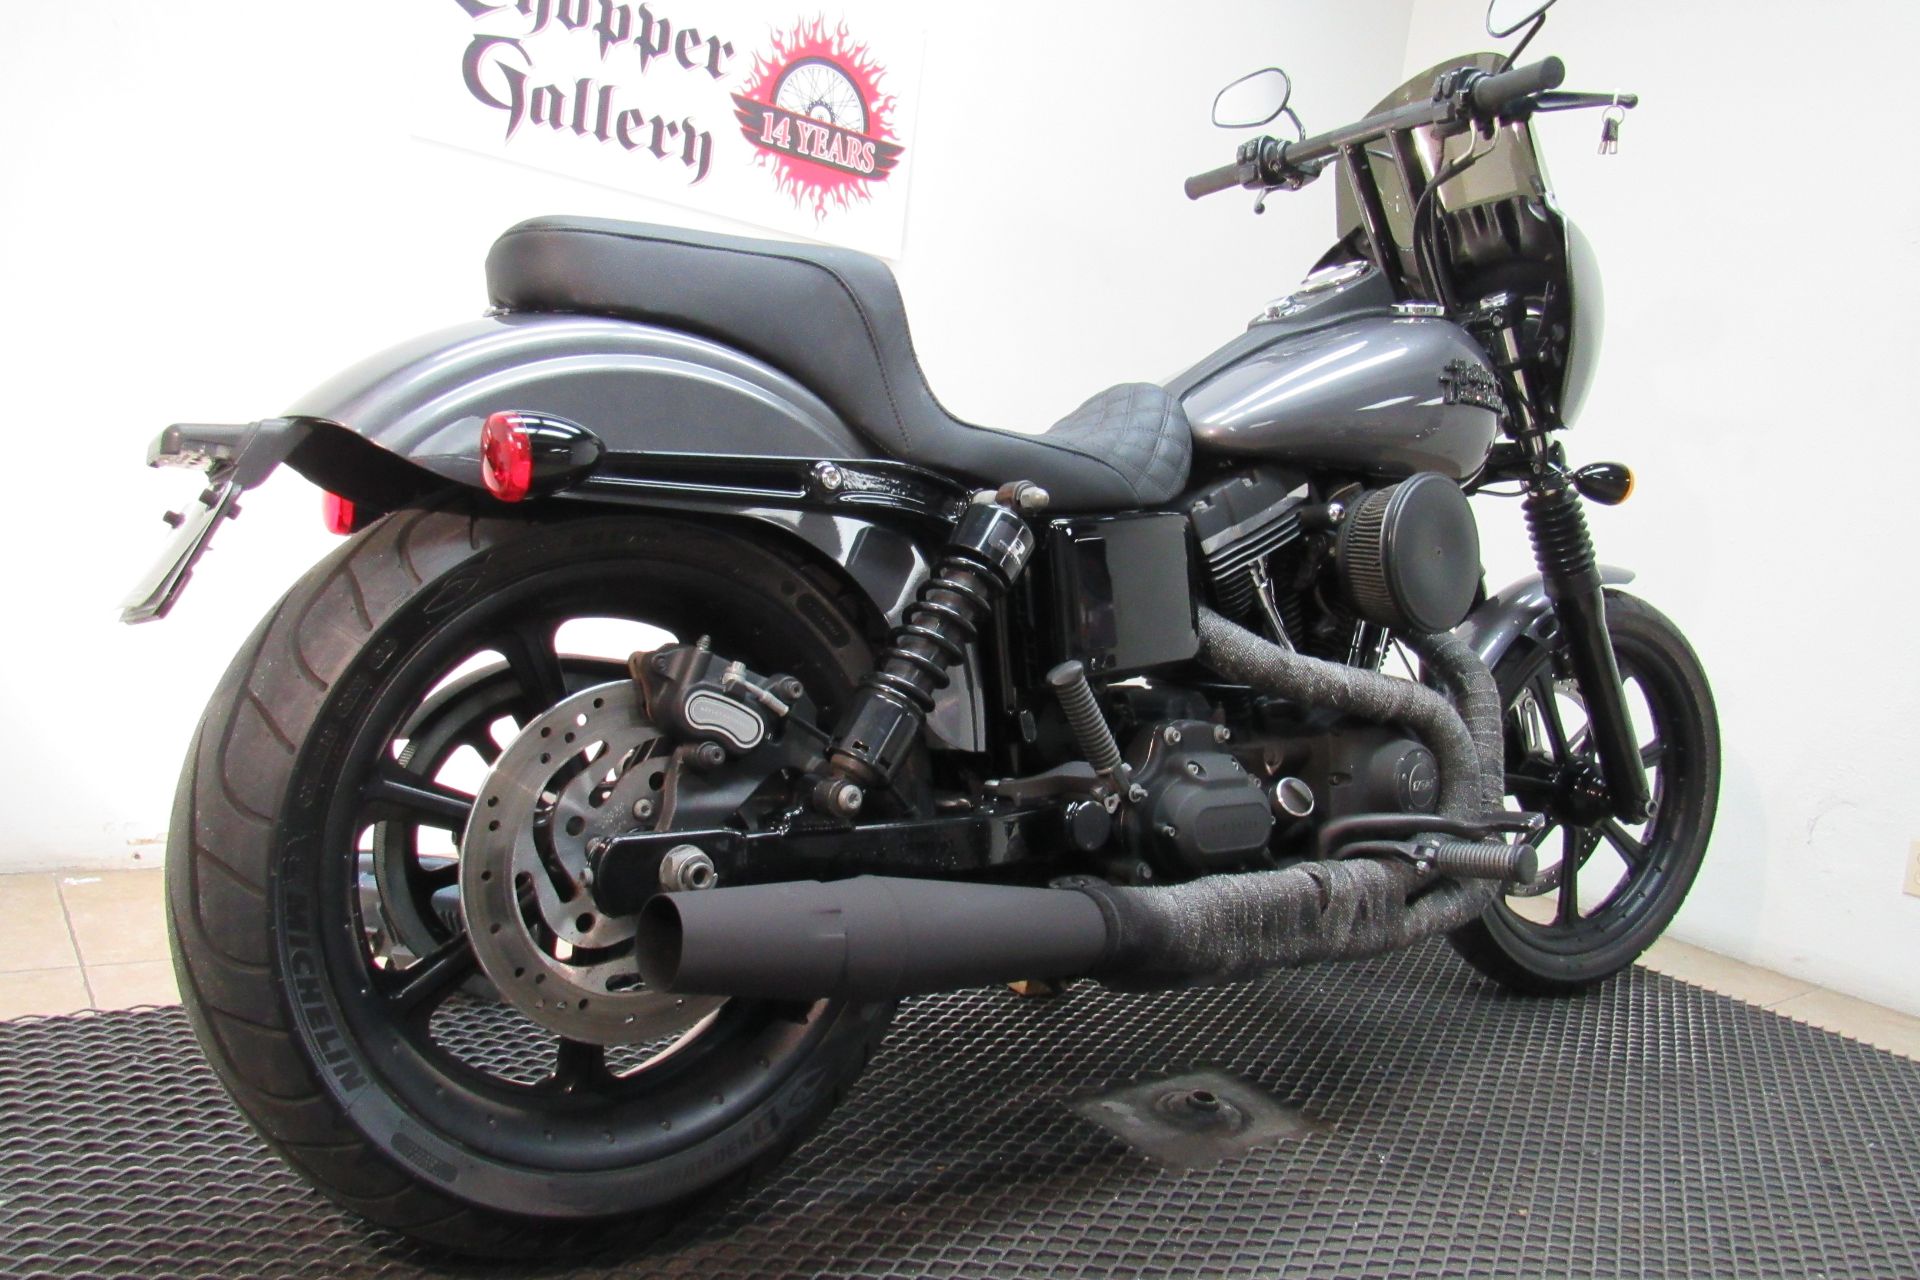 2014 Harley-Davidson Dyna® Street Bob® in Temecula, California - Photo 23